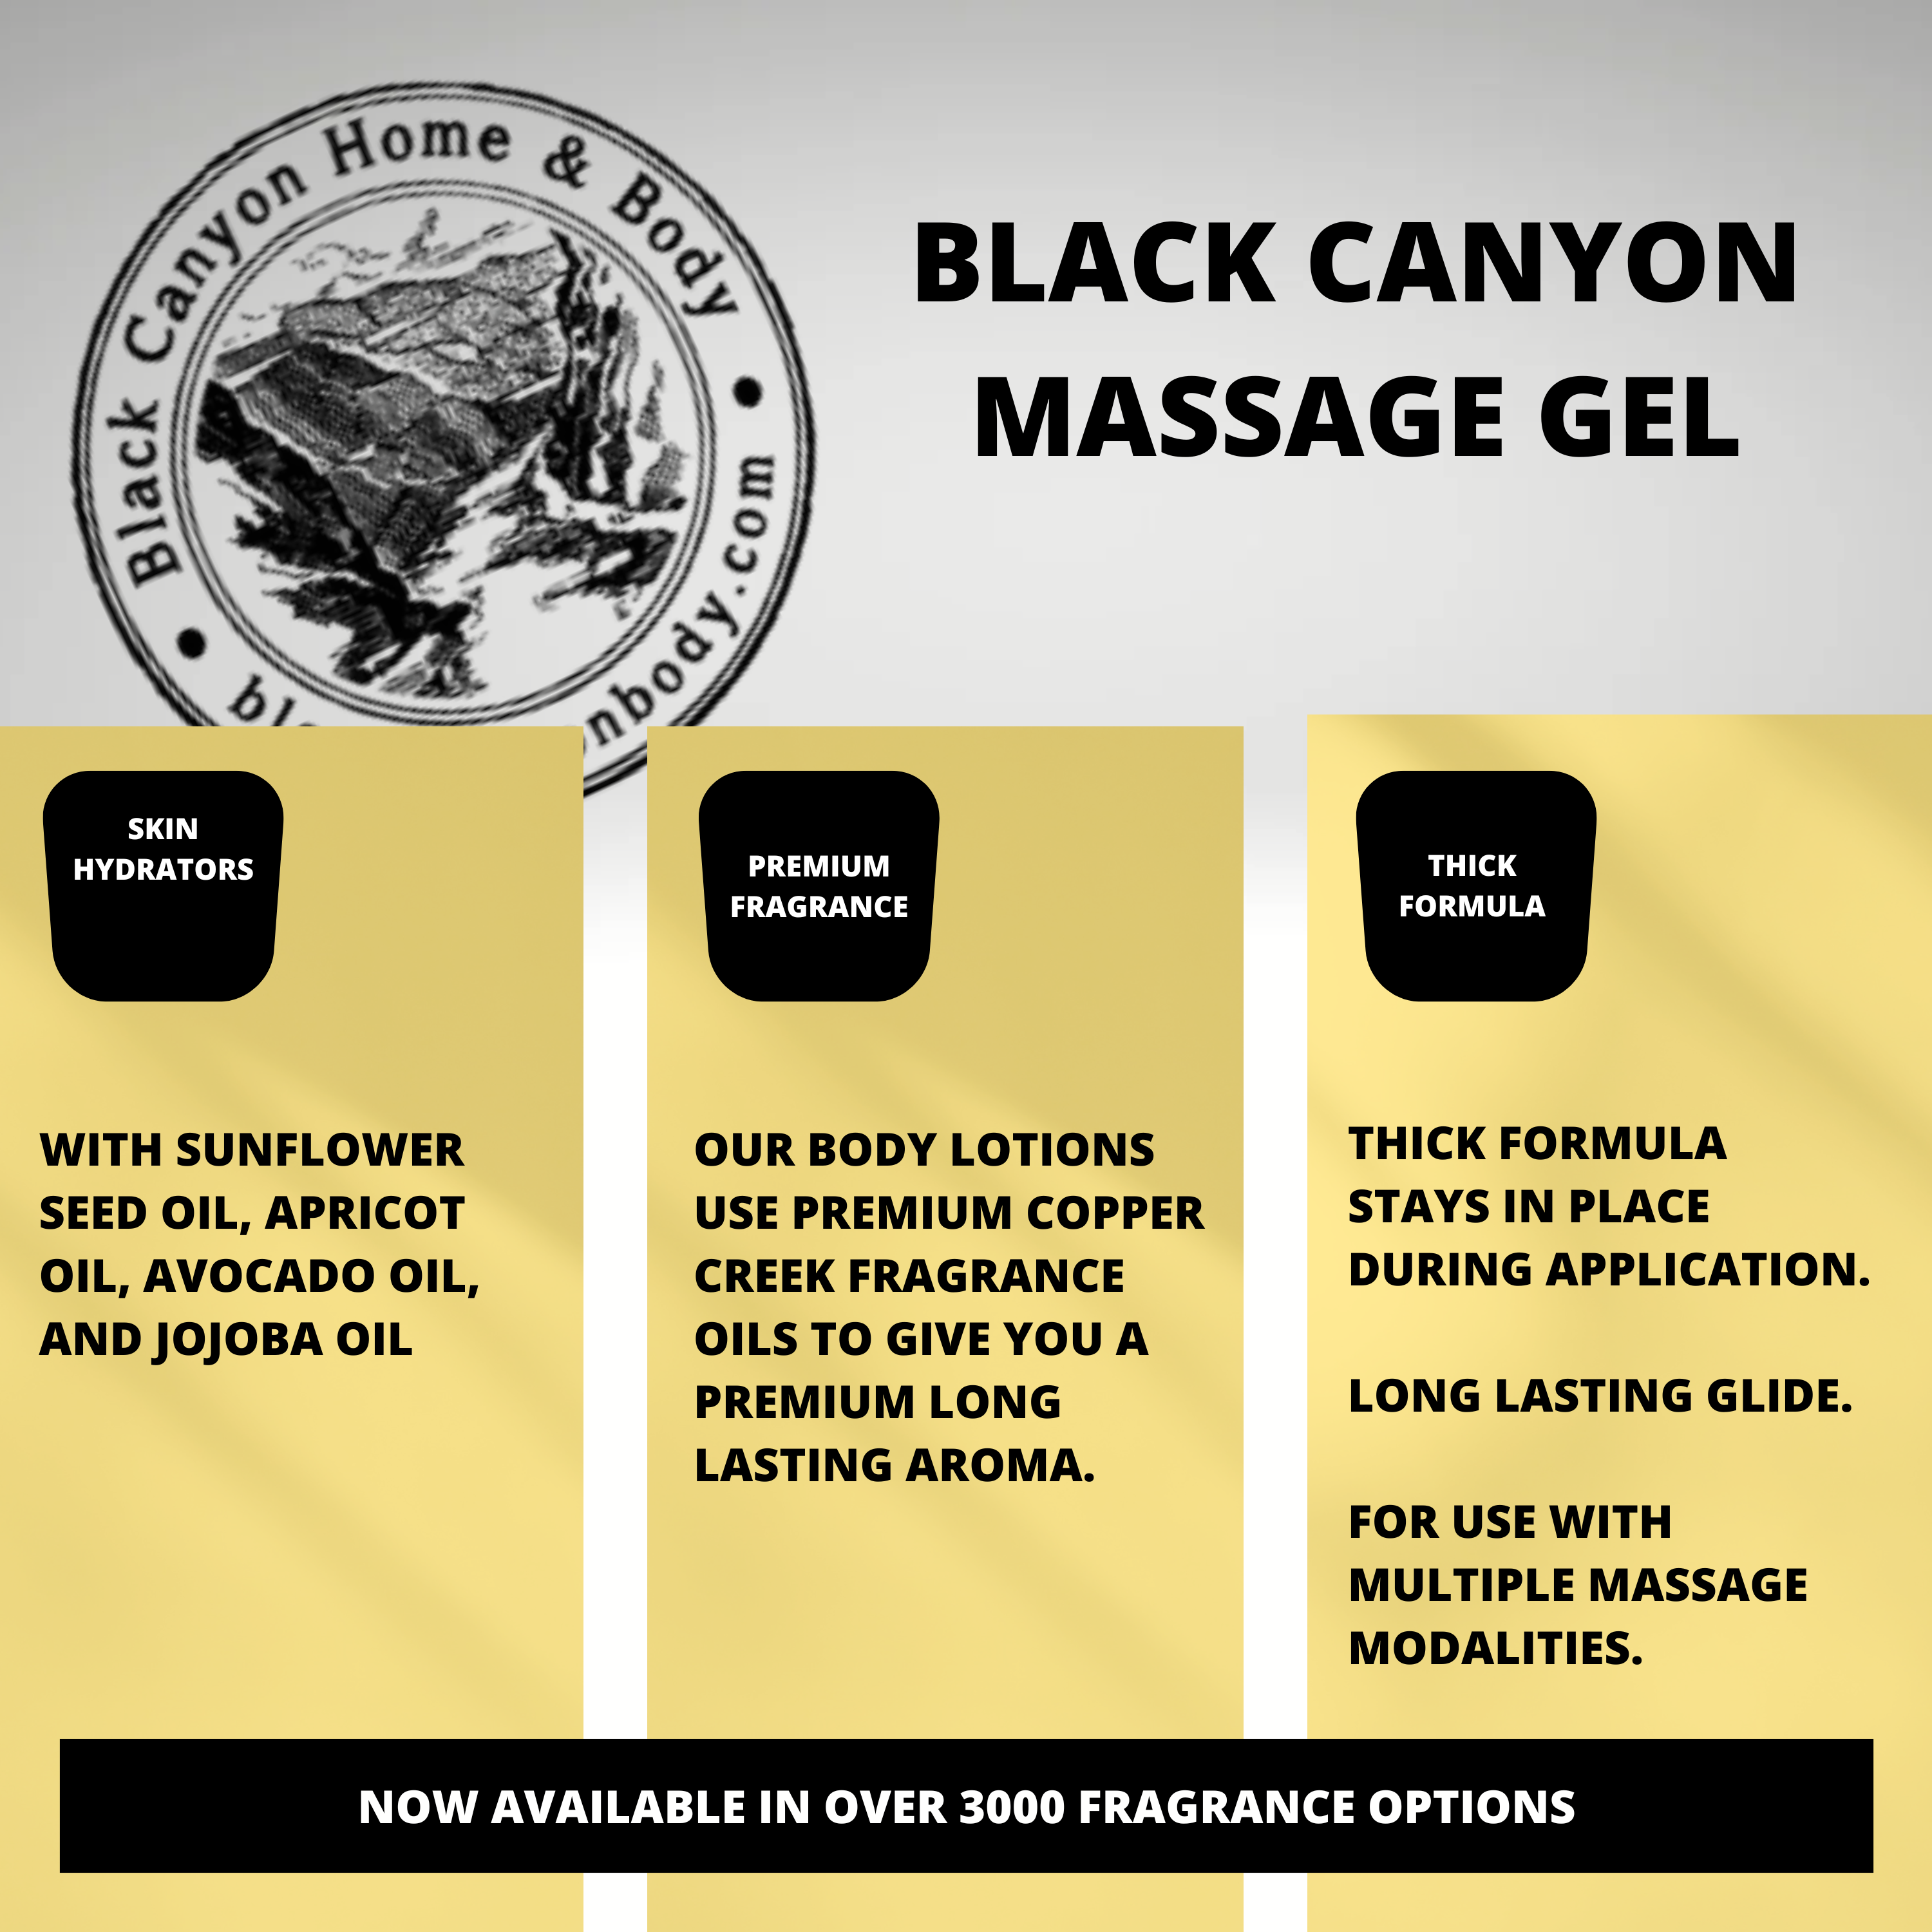 Black Canyon Black Cherry Vanilla Scented Massage Gel